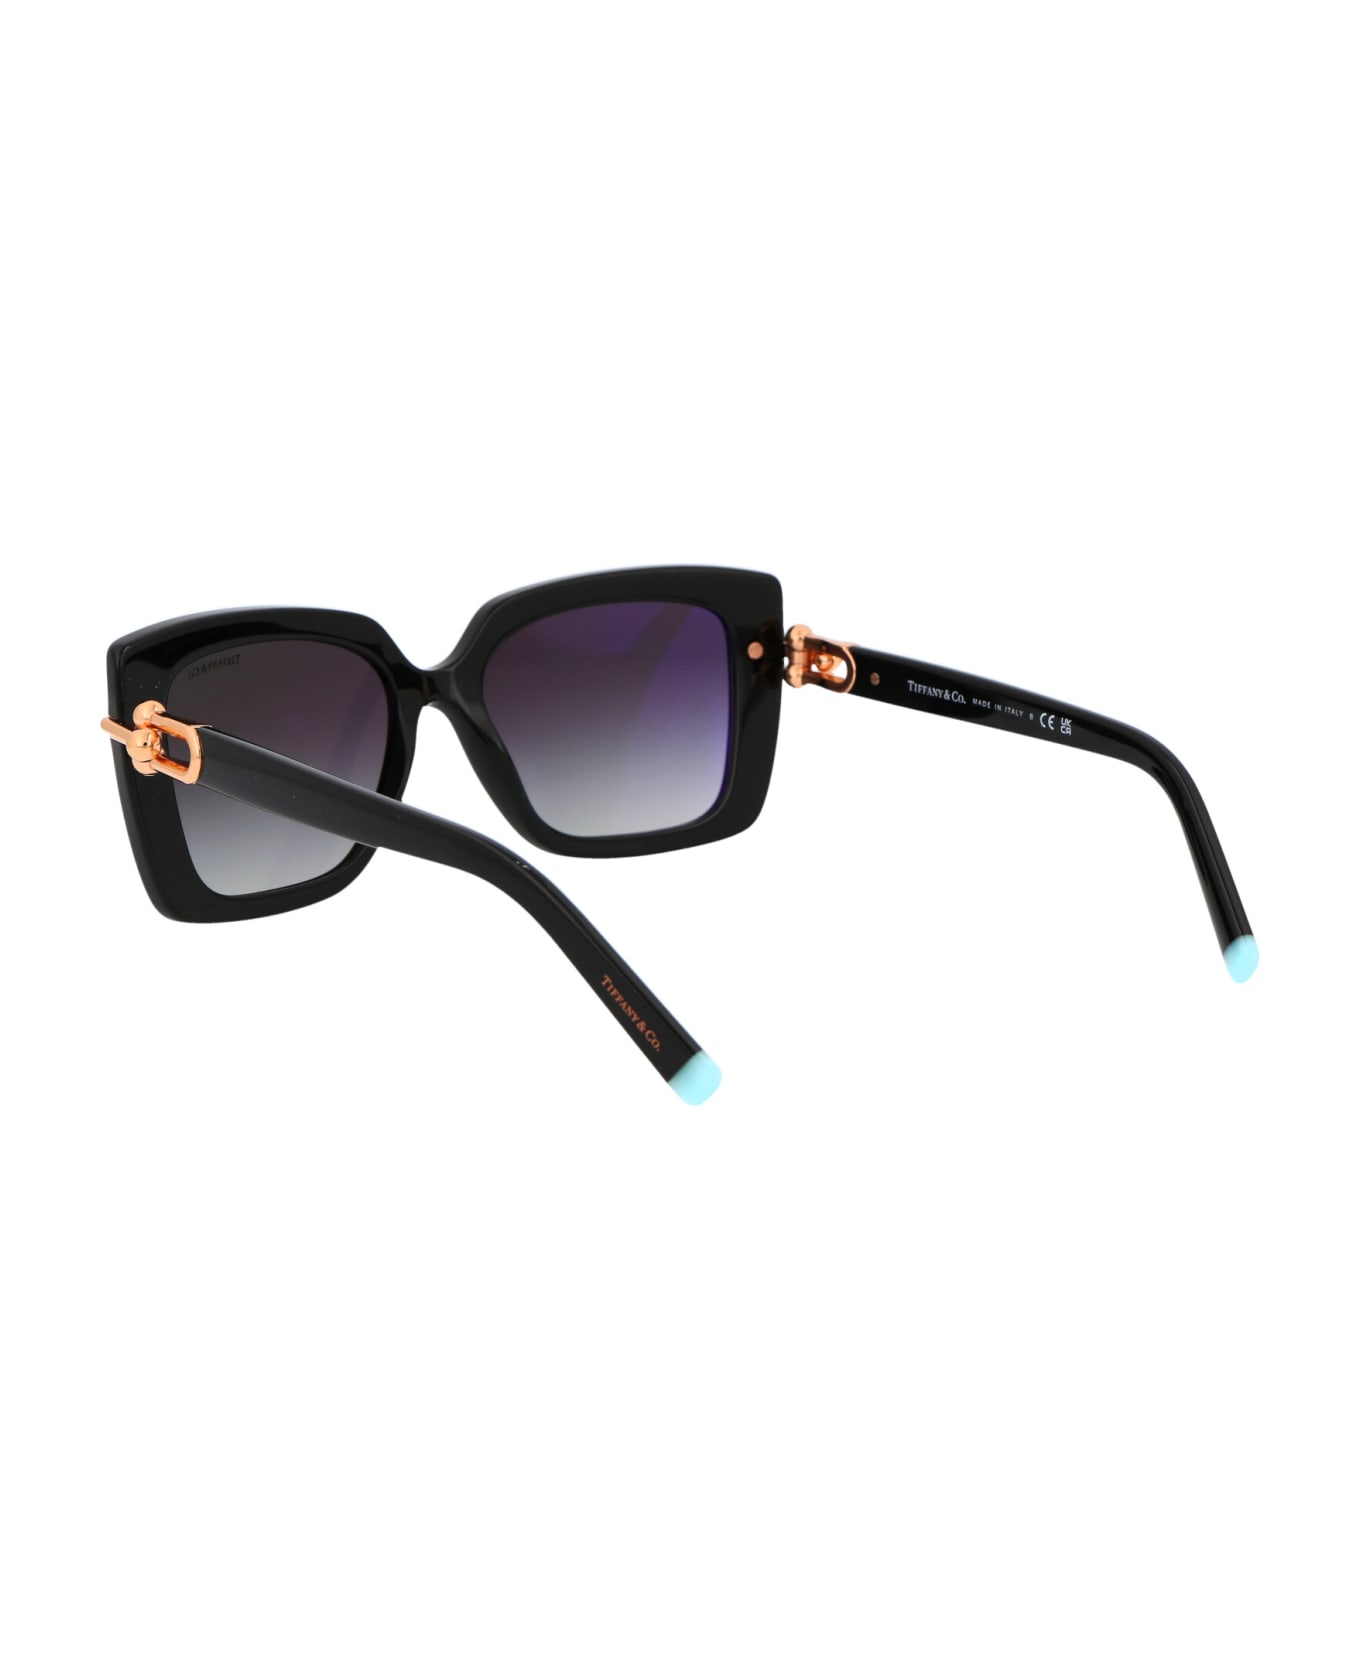 Tiffany & Co. 0tf4199 Sunglasses - 80013C Black